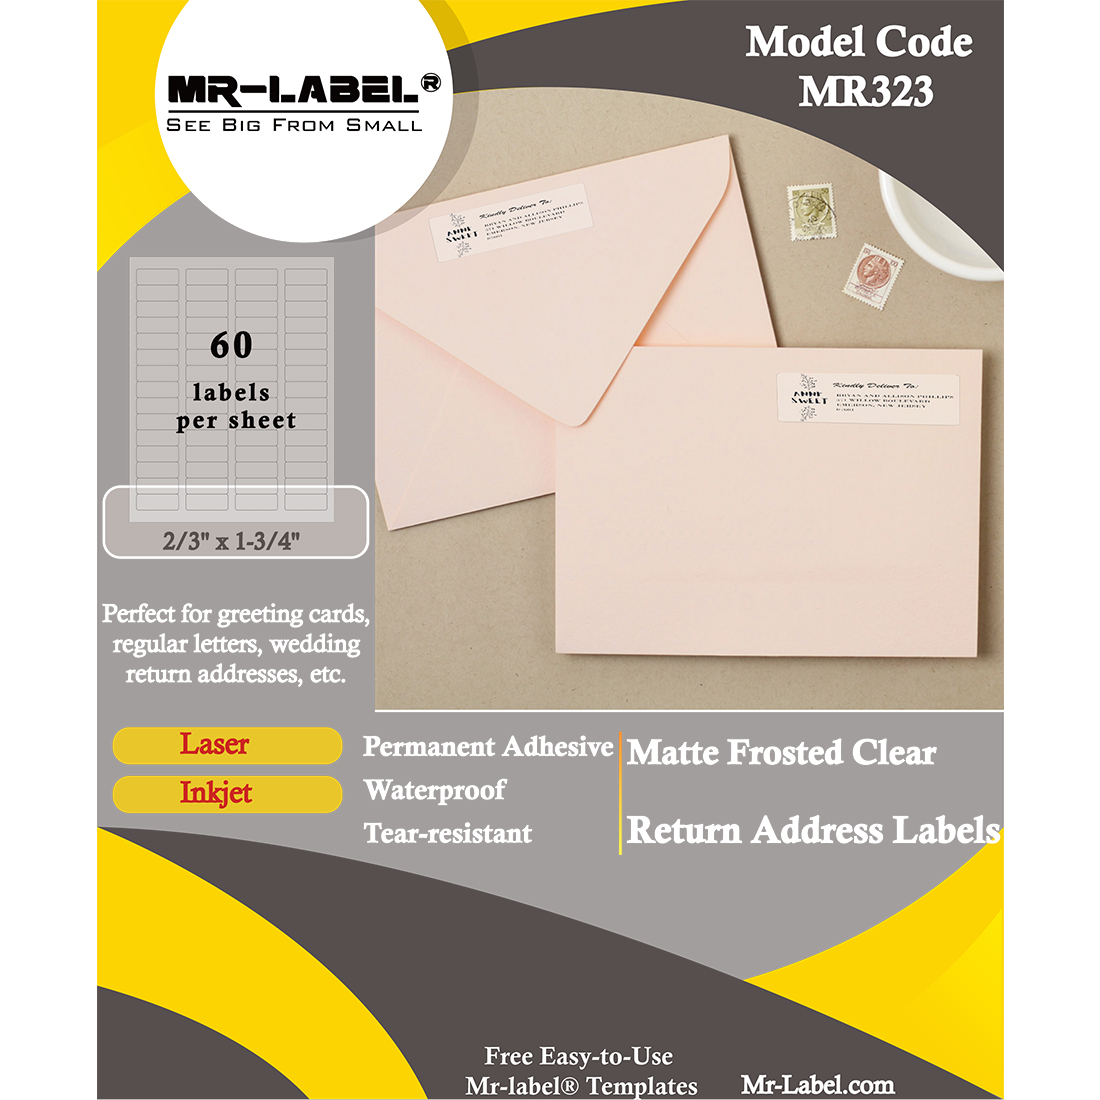 Mr-Label 2/3 x 1-3/4 Translucent Return Address Labels - Waterproof and  Tear-Resistant - for Inkjet & Laser Printer - Permanent Adhesive